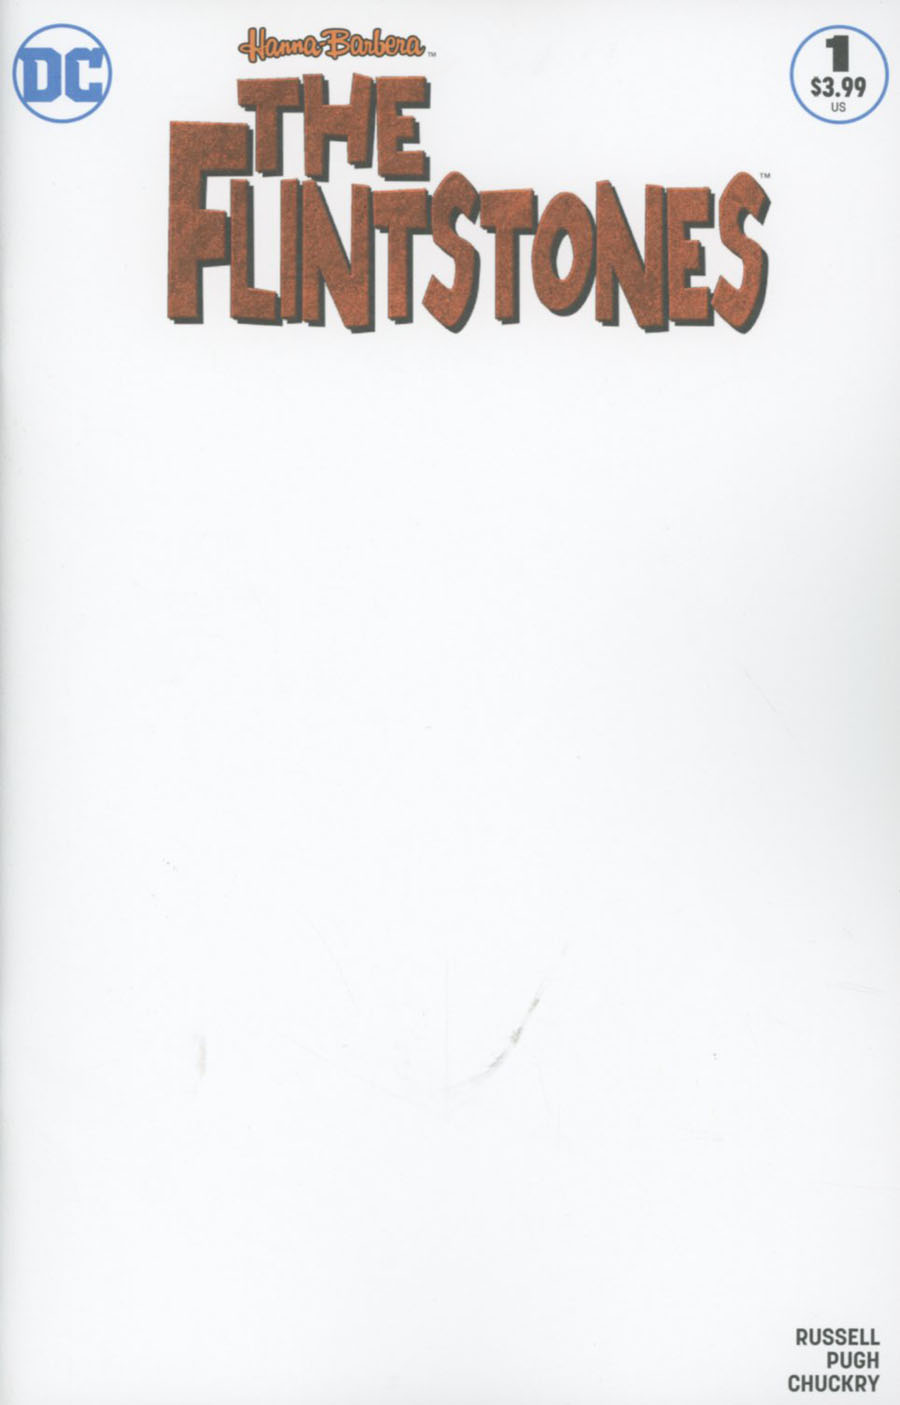 Flintstones (DC) #1 Cover G Variant Blank Cover